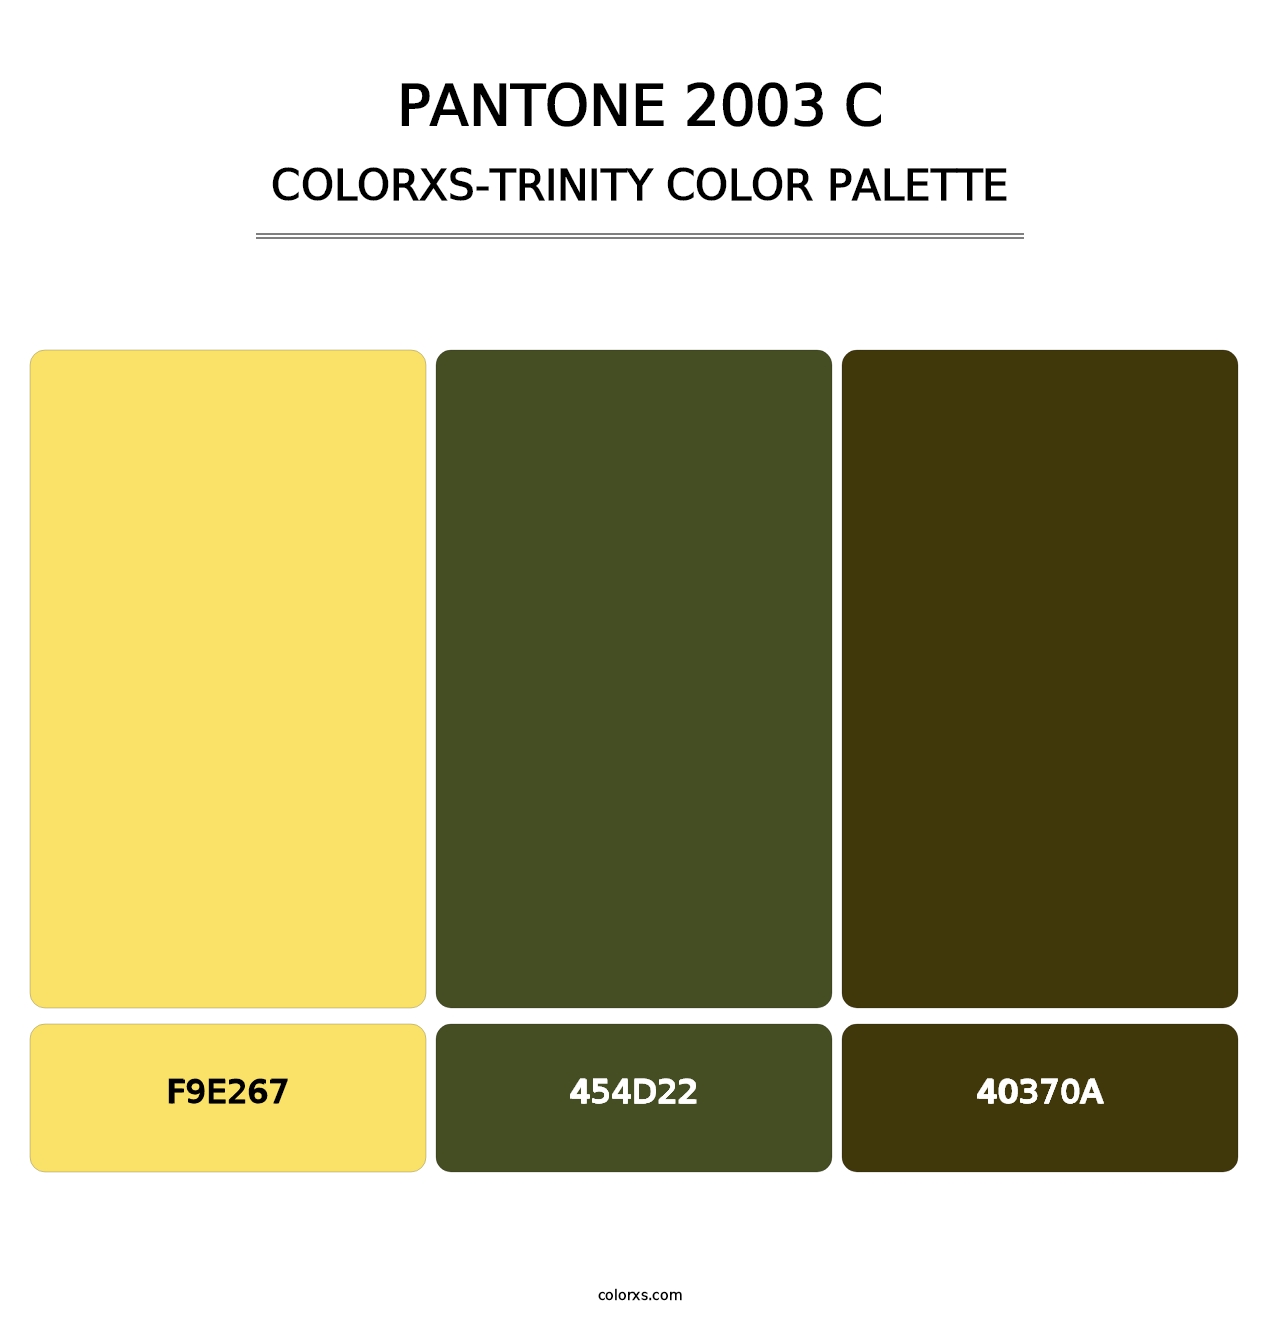 PANTONE 2003 C - Colorxs Trinity Palette